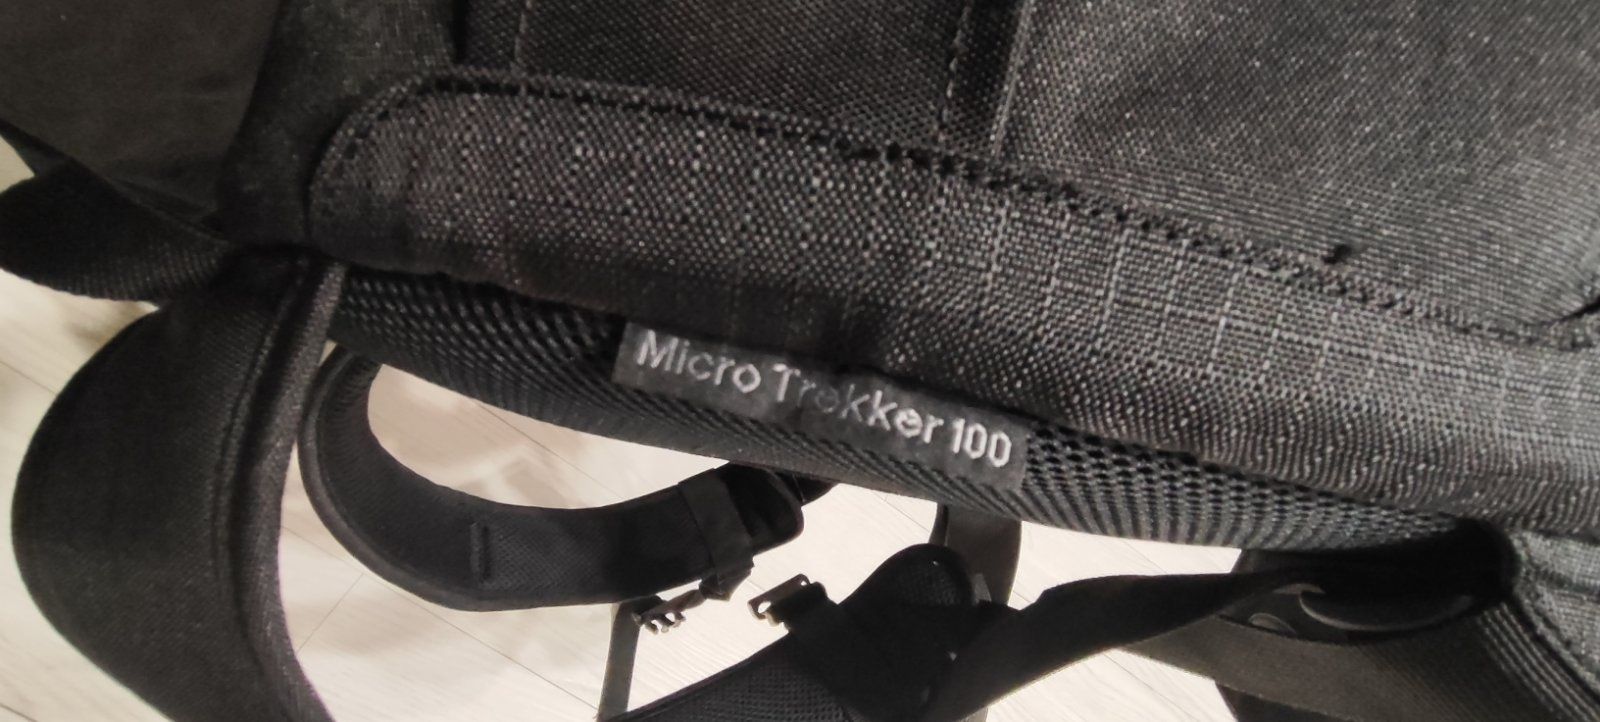 Рюкзак для фотоапарата LOWEPRO micro trekker 100FG.